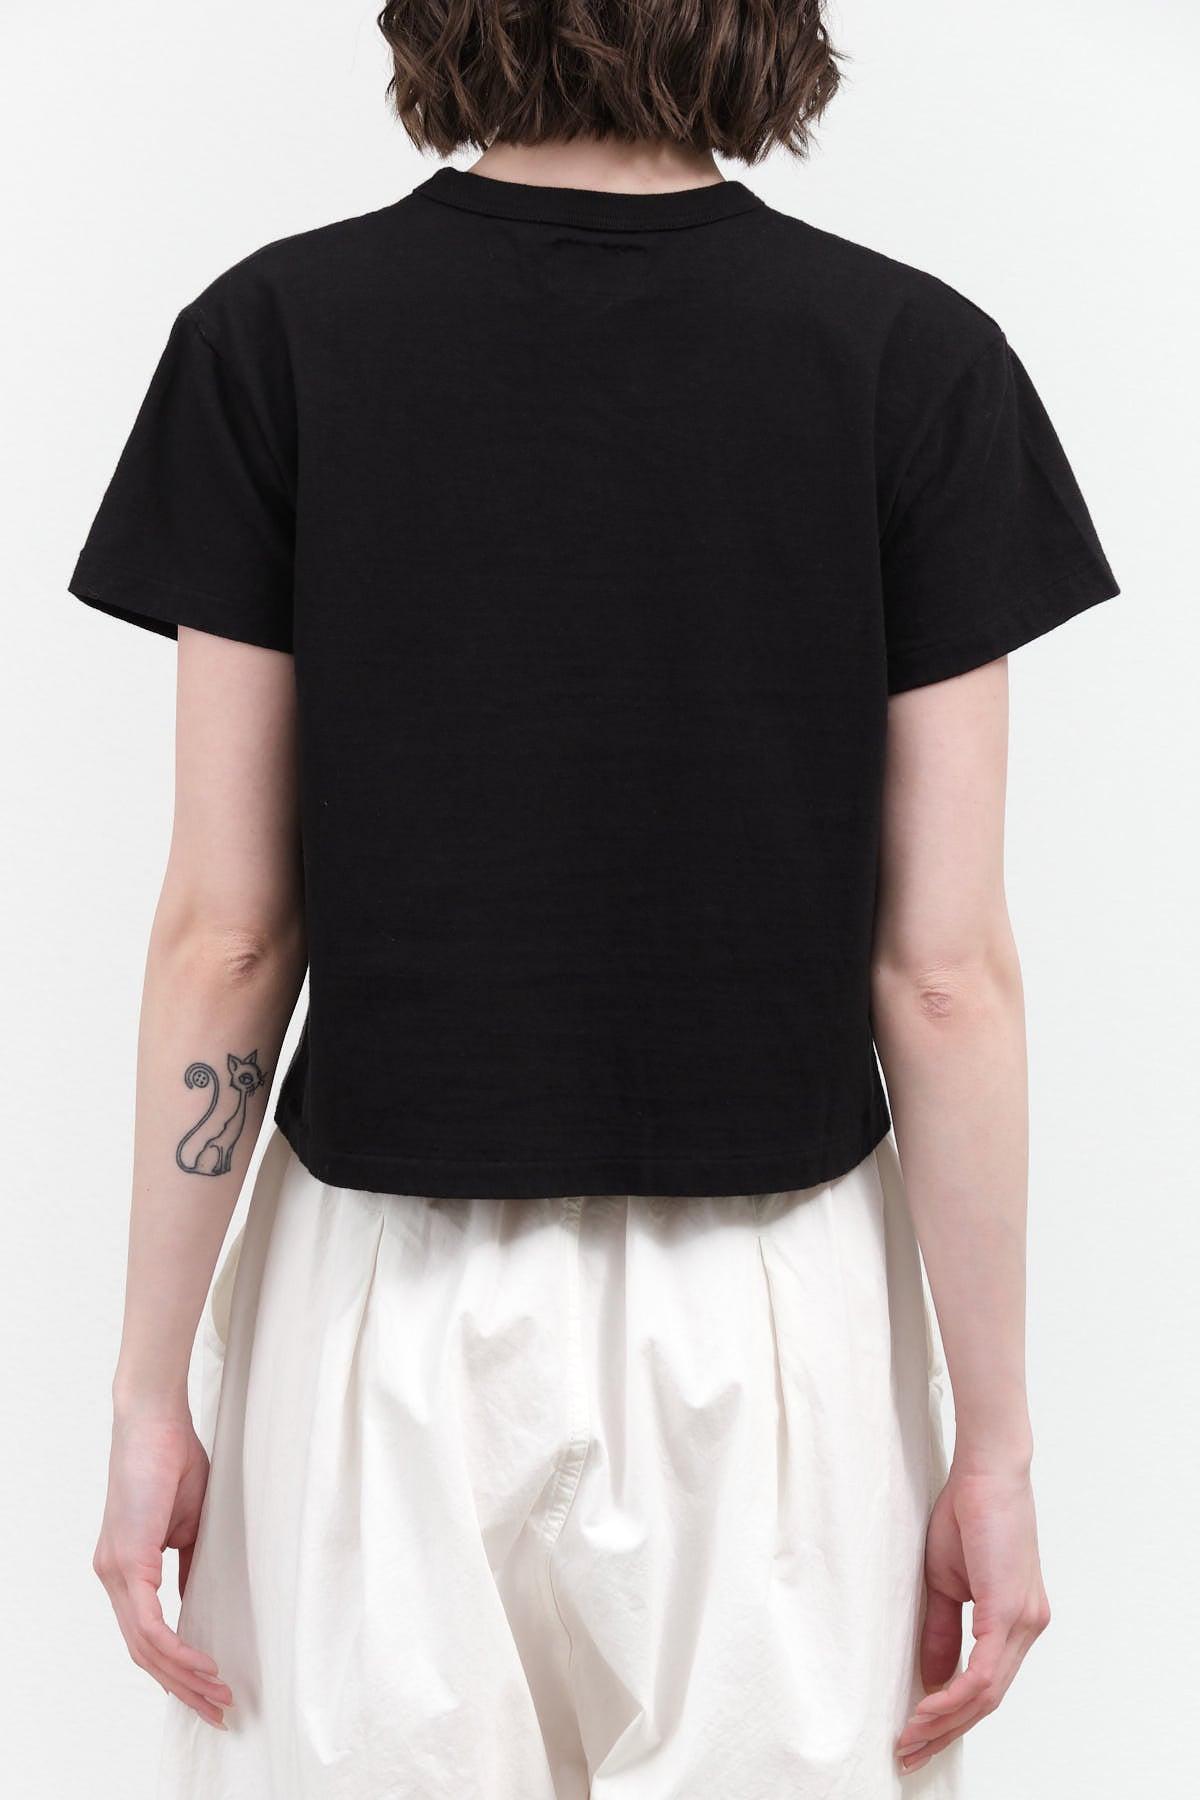  Black Short Sleeve Hi'aka T-shirt by Sunray Sportswear